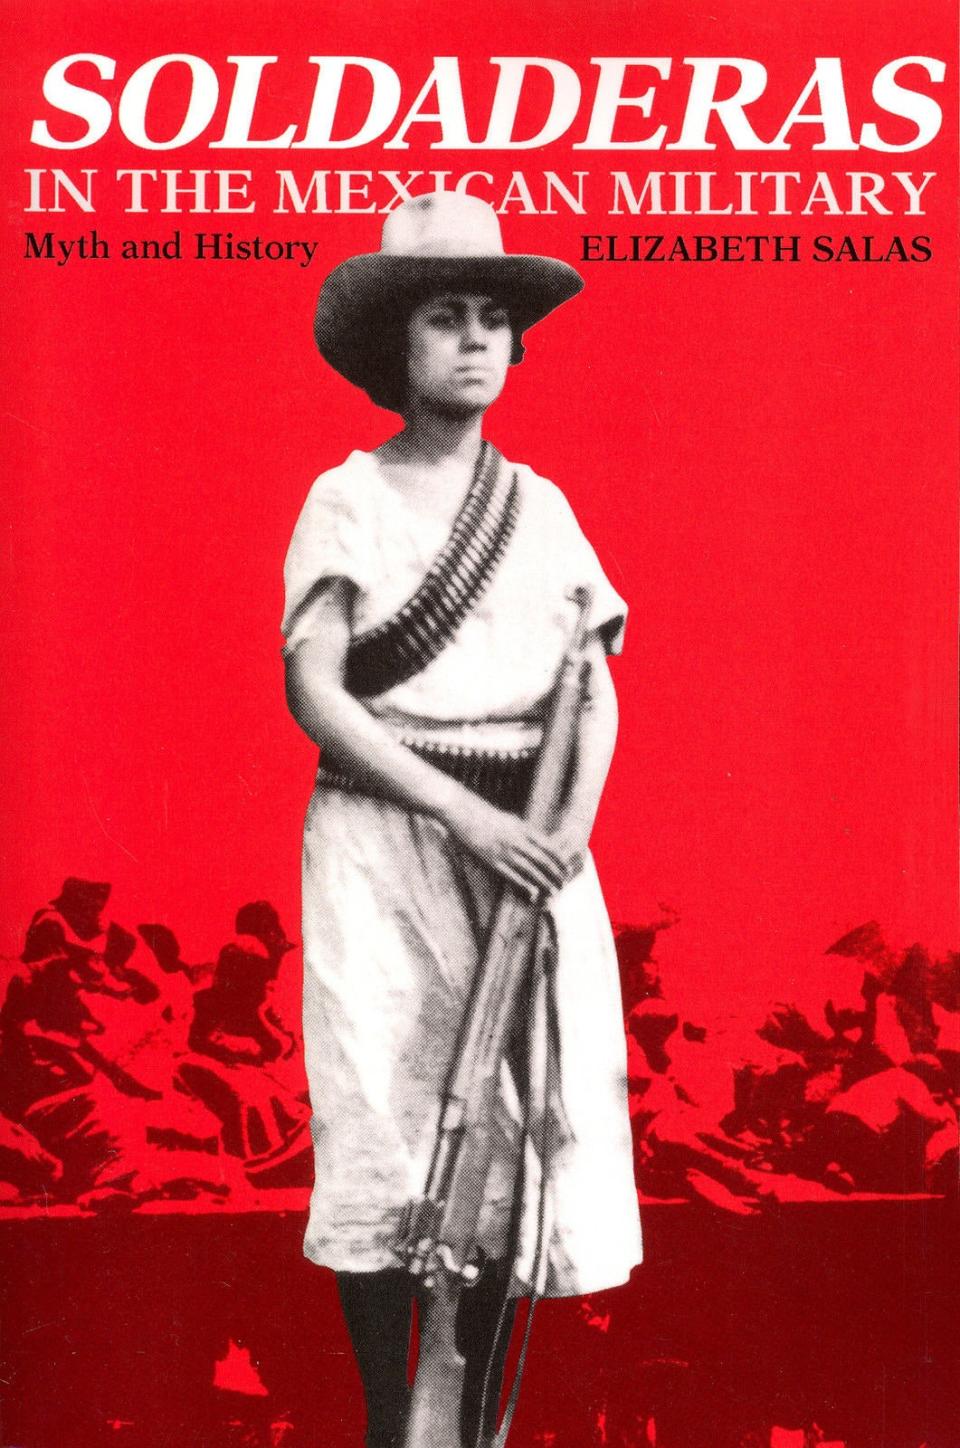 Soldaderas in the Mexican Military by Elizabeth Salas